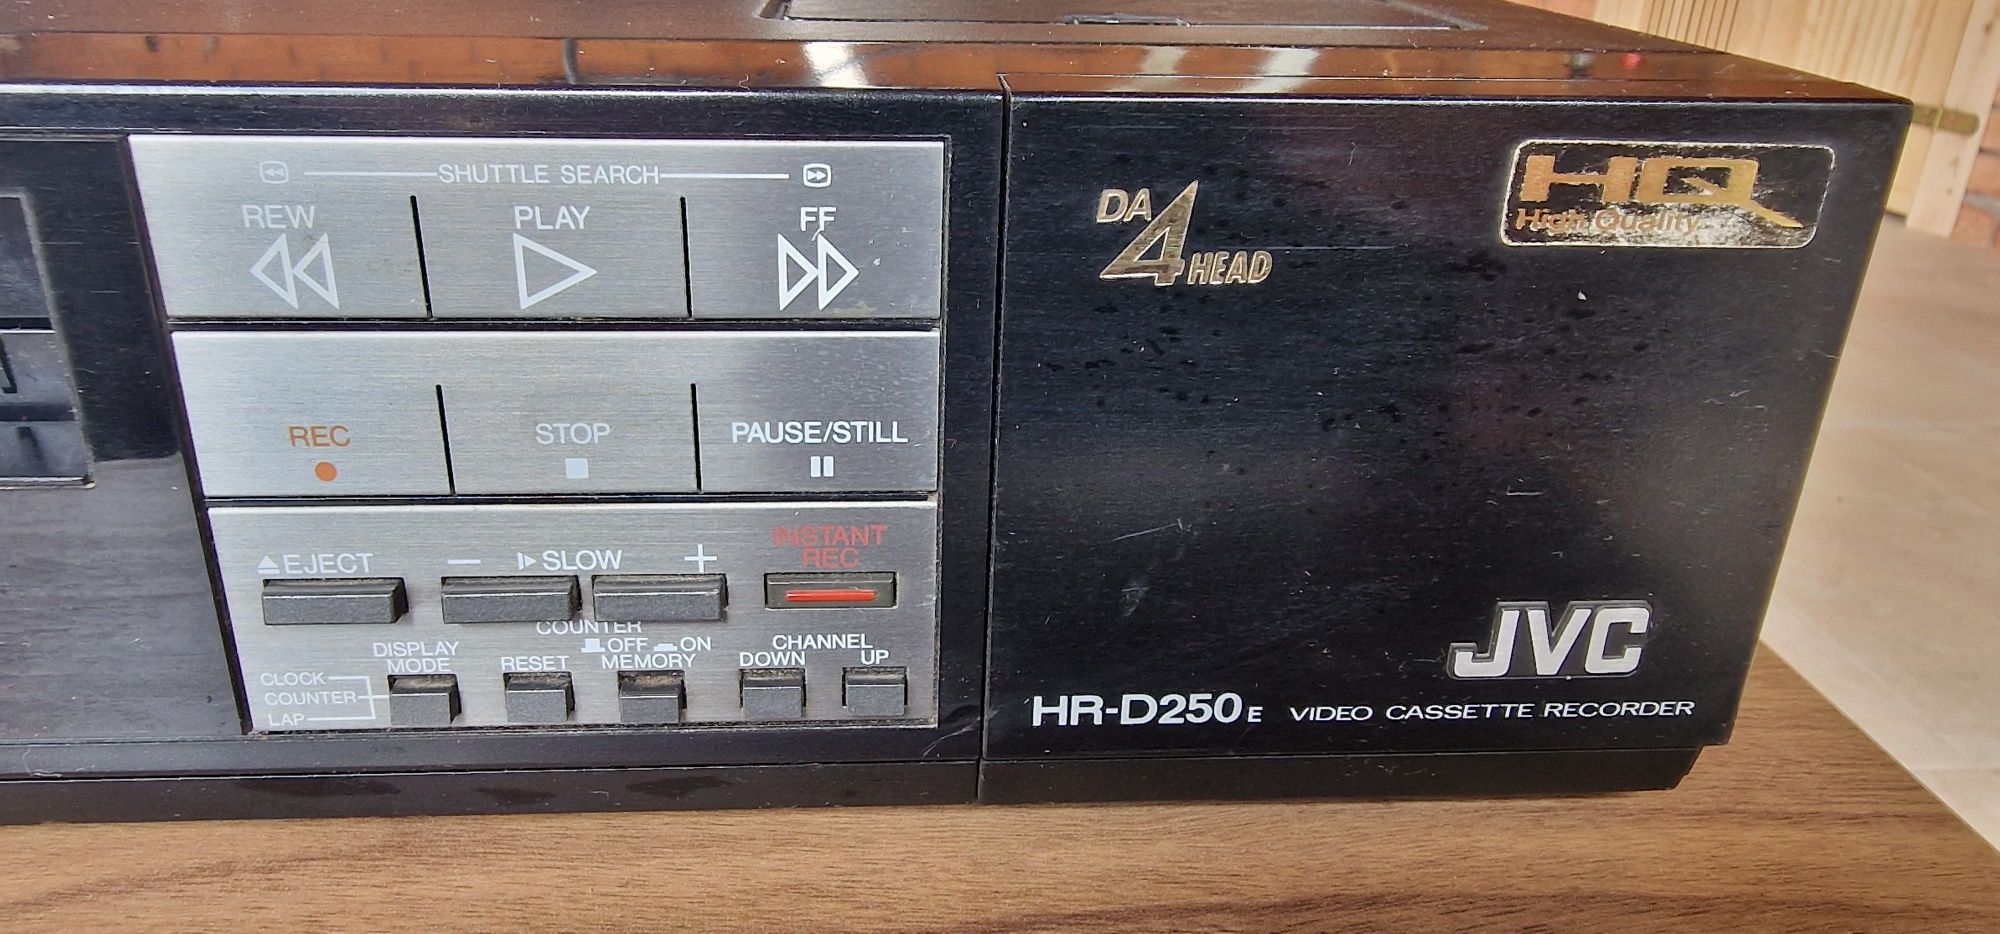 Video recorder JVC HR-D250E defect